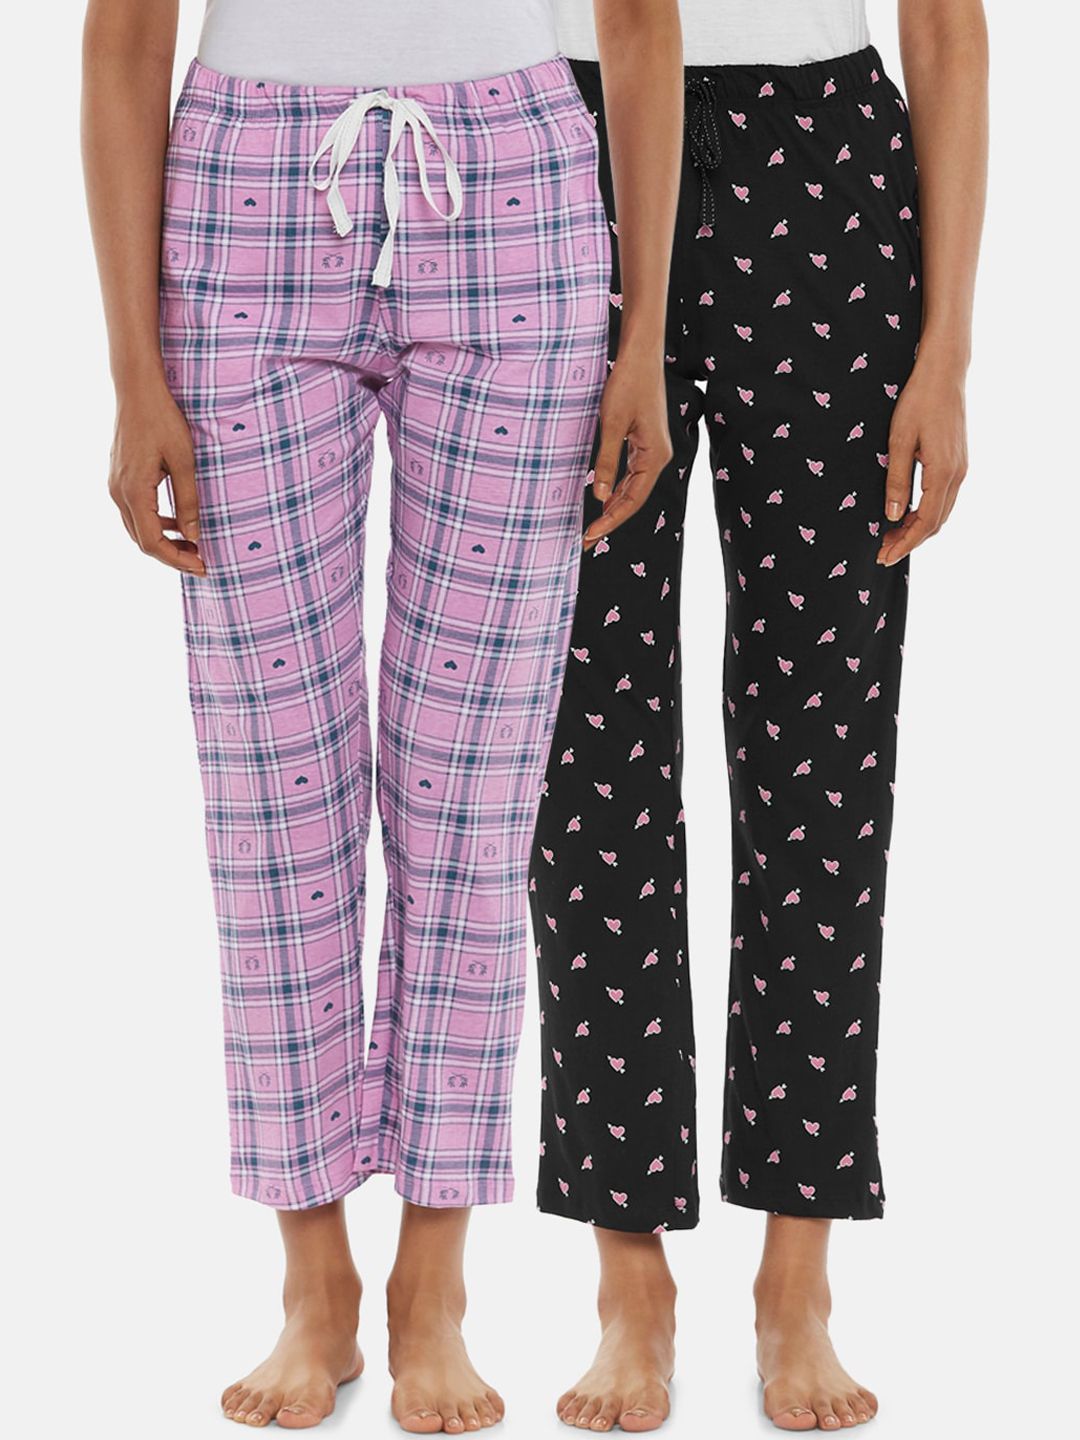 Dreamz by Pantaloons Women Pink & Black Set of 2 Cotton Lounge Pants Price in India